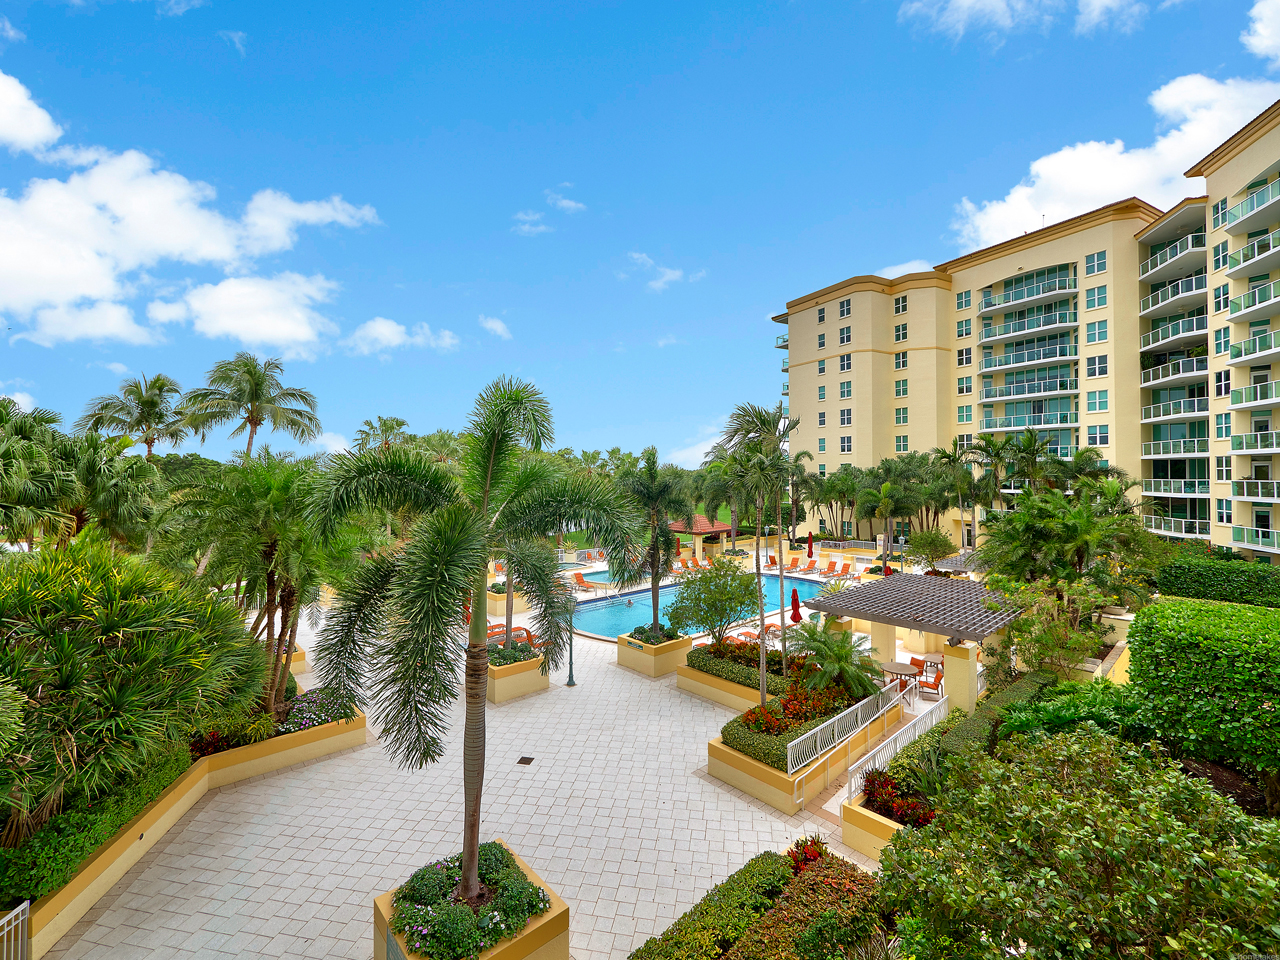 Townsend Place luxury condominium A307, 500 SE Mizner Blvd, unit A307, Boca Raton FL. 33432 view picture1